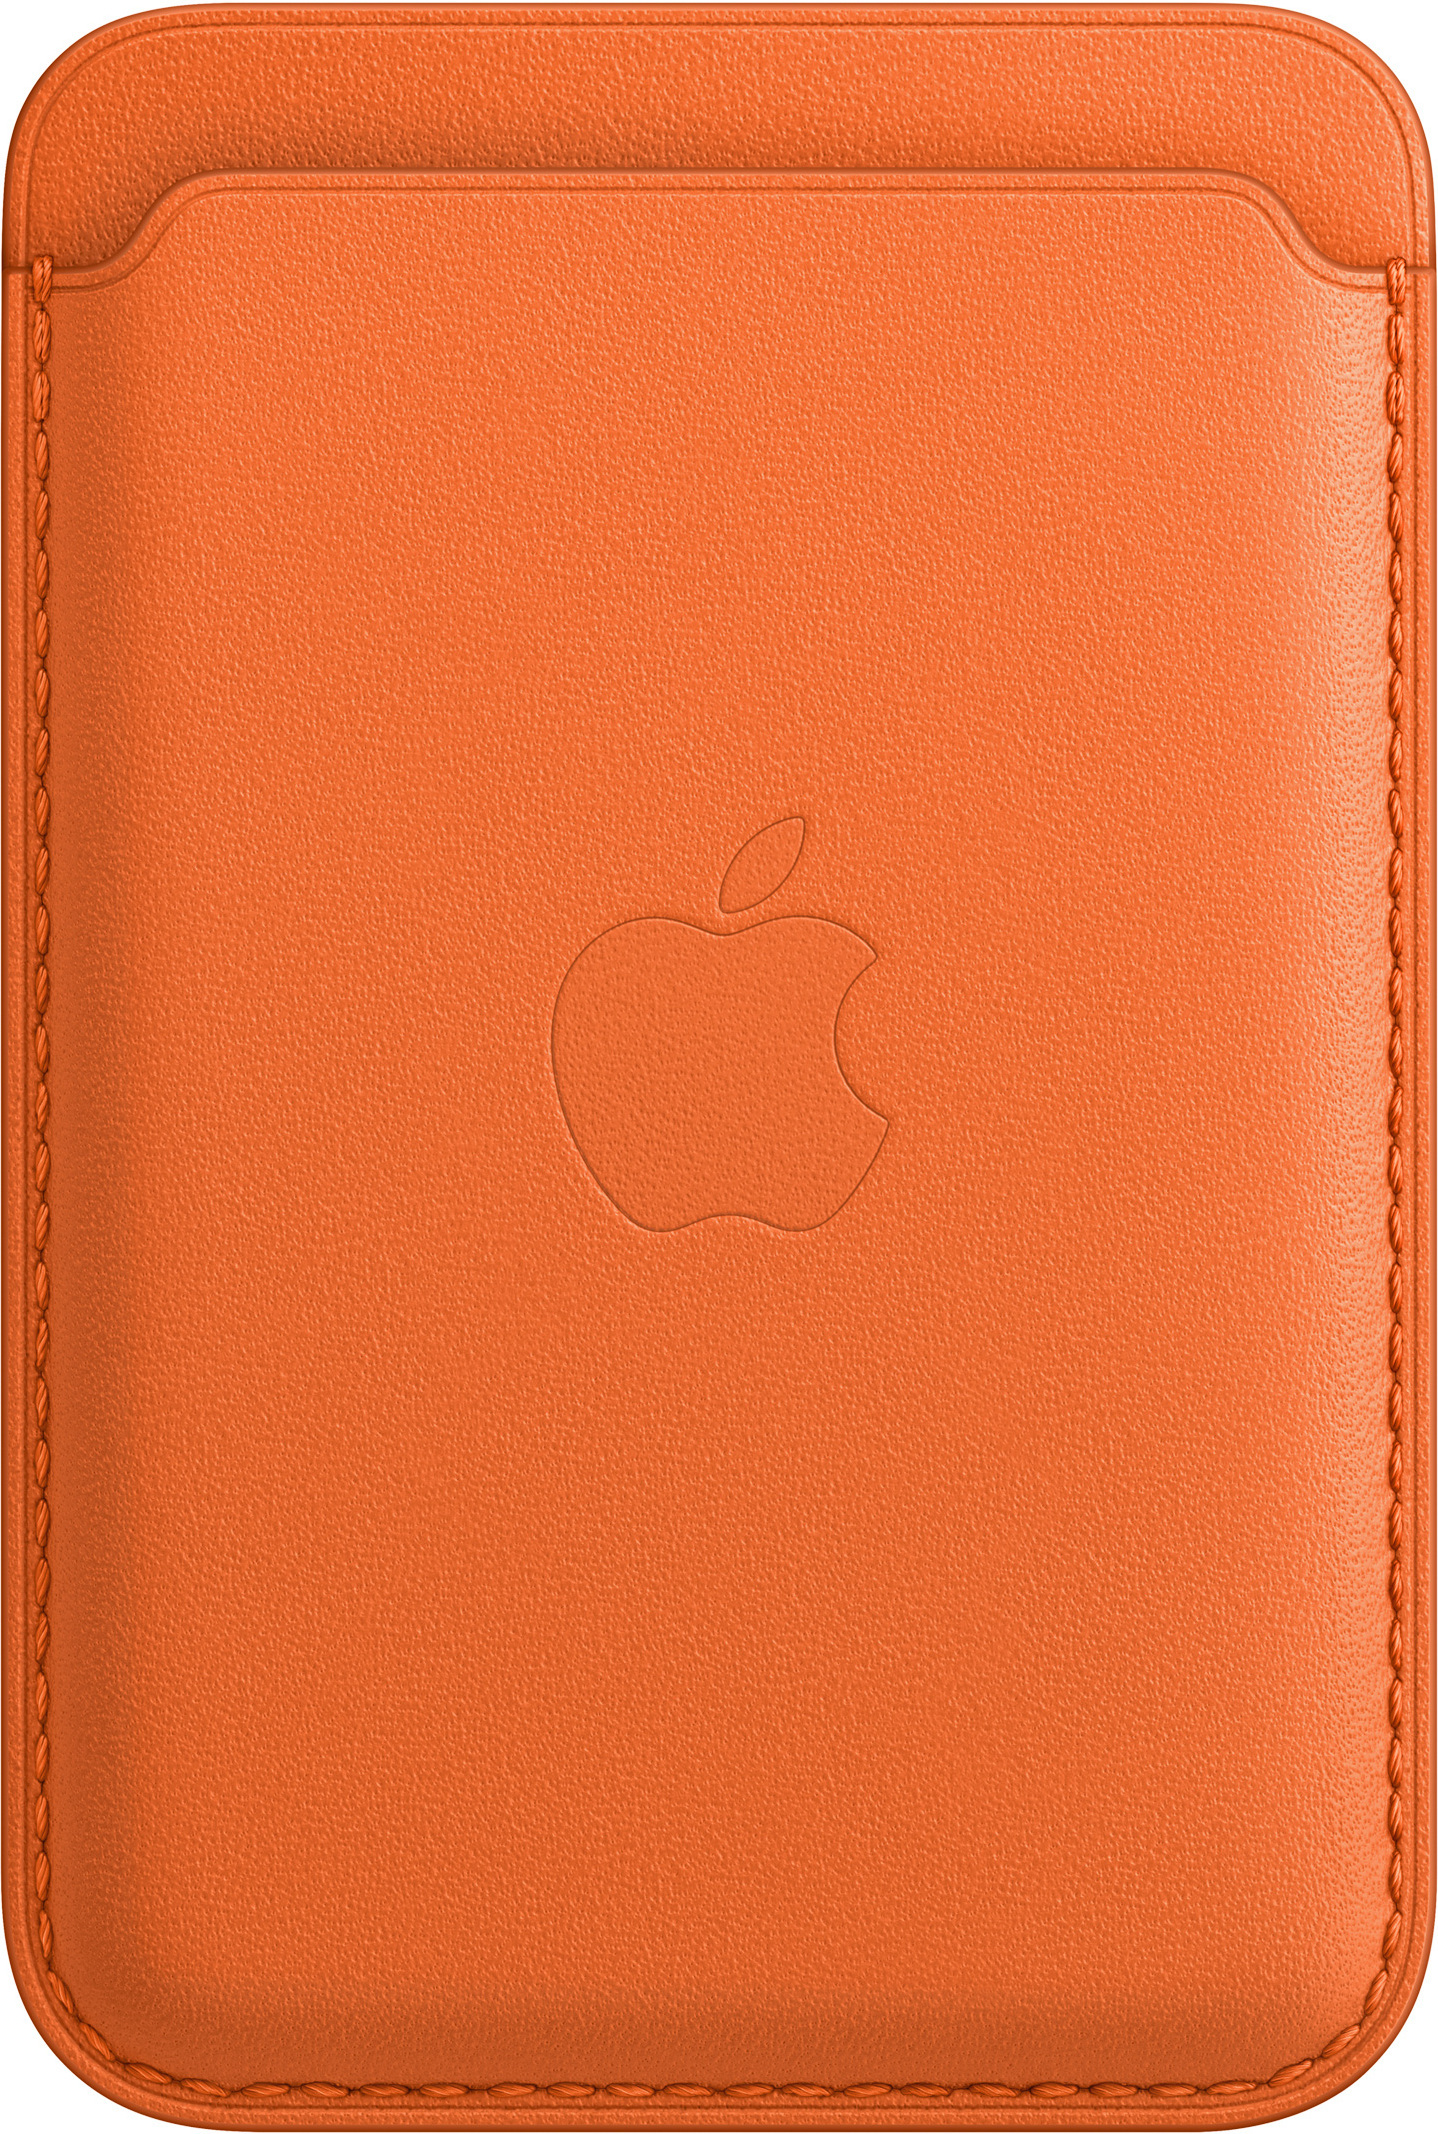 Apple Leather Card Case